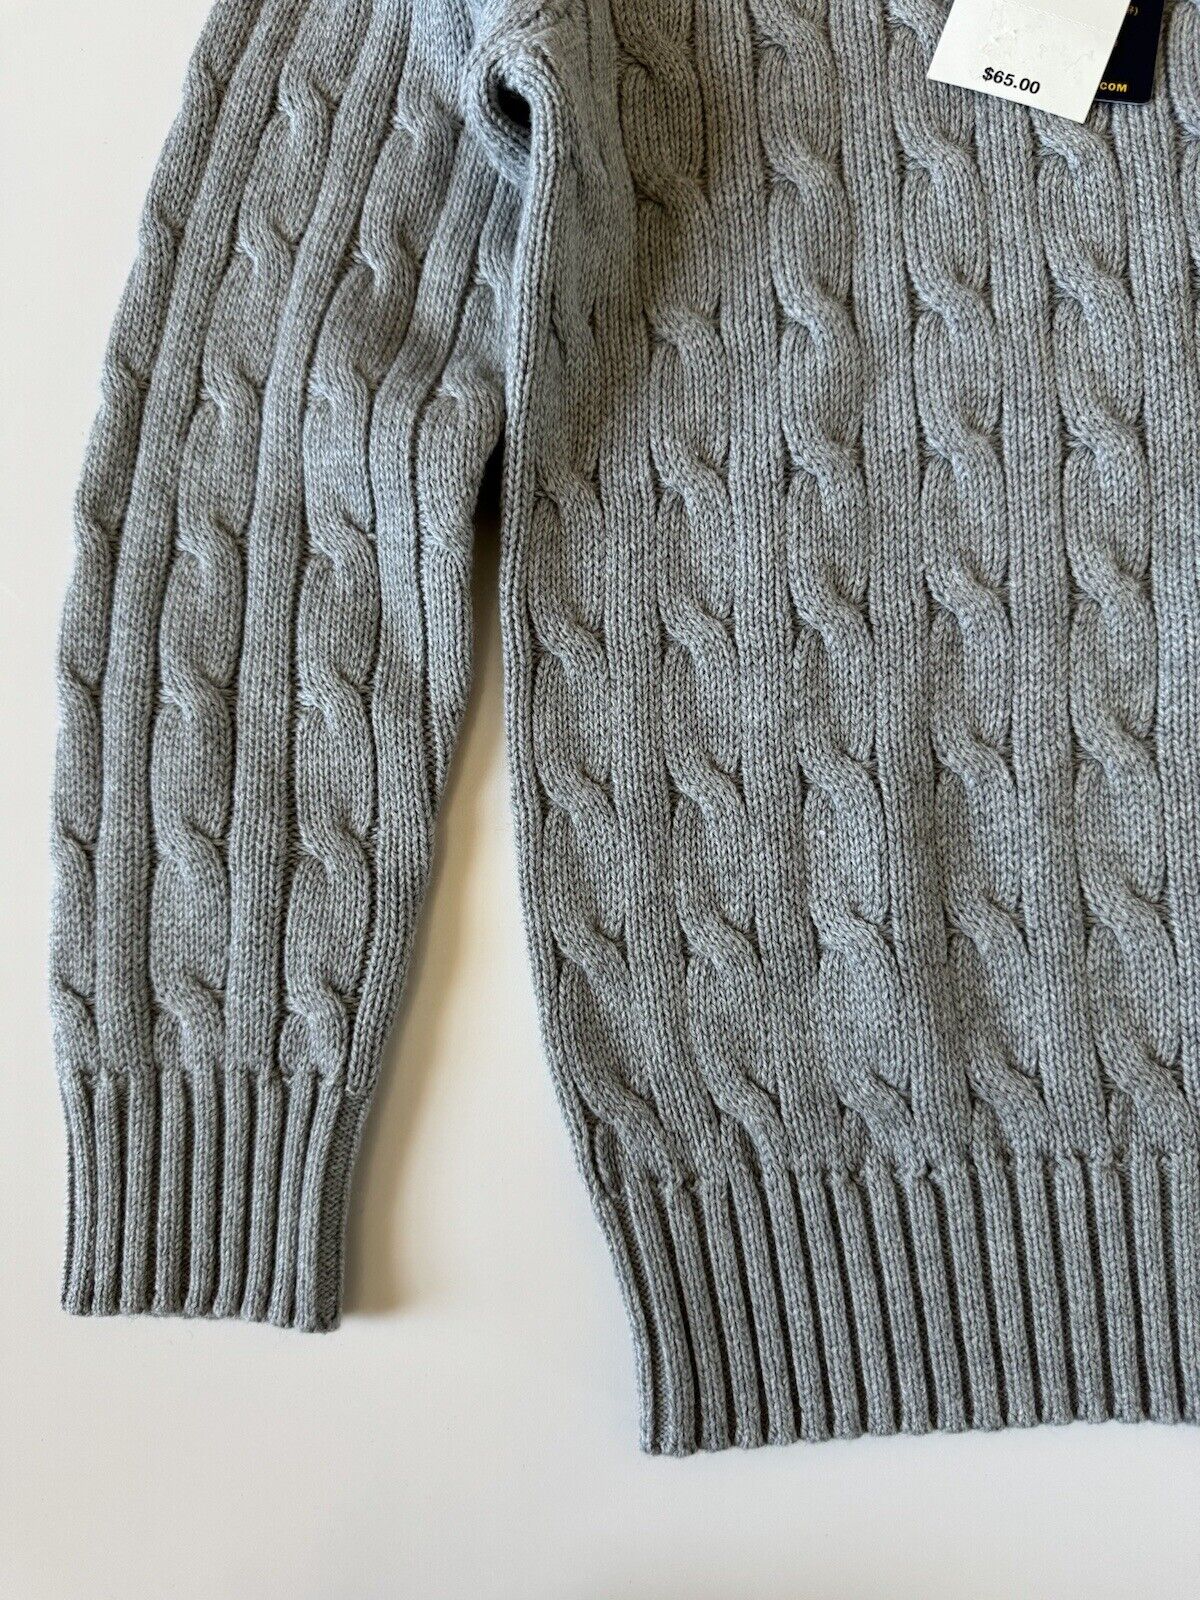 NWT Polo Ralph Lauren Boy's Gray Cotton Sweater Size 7